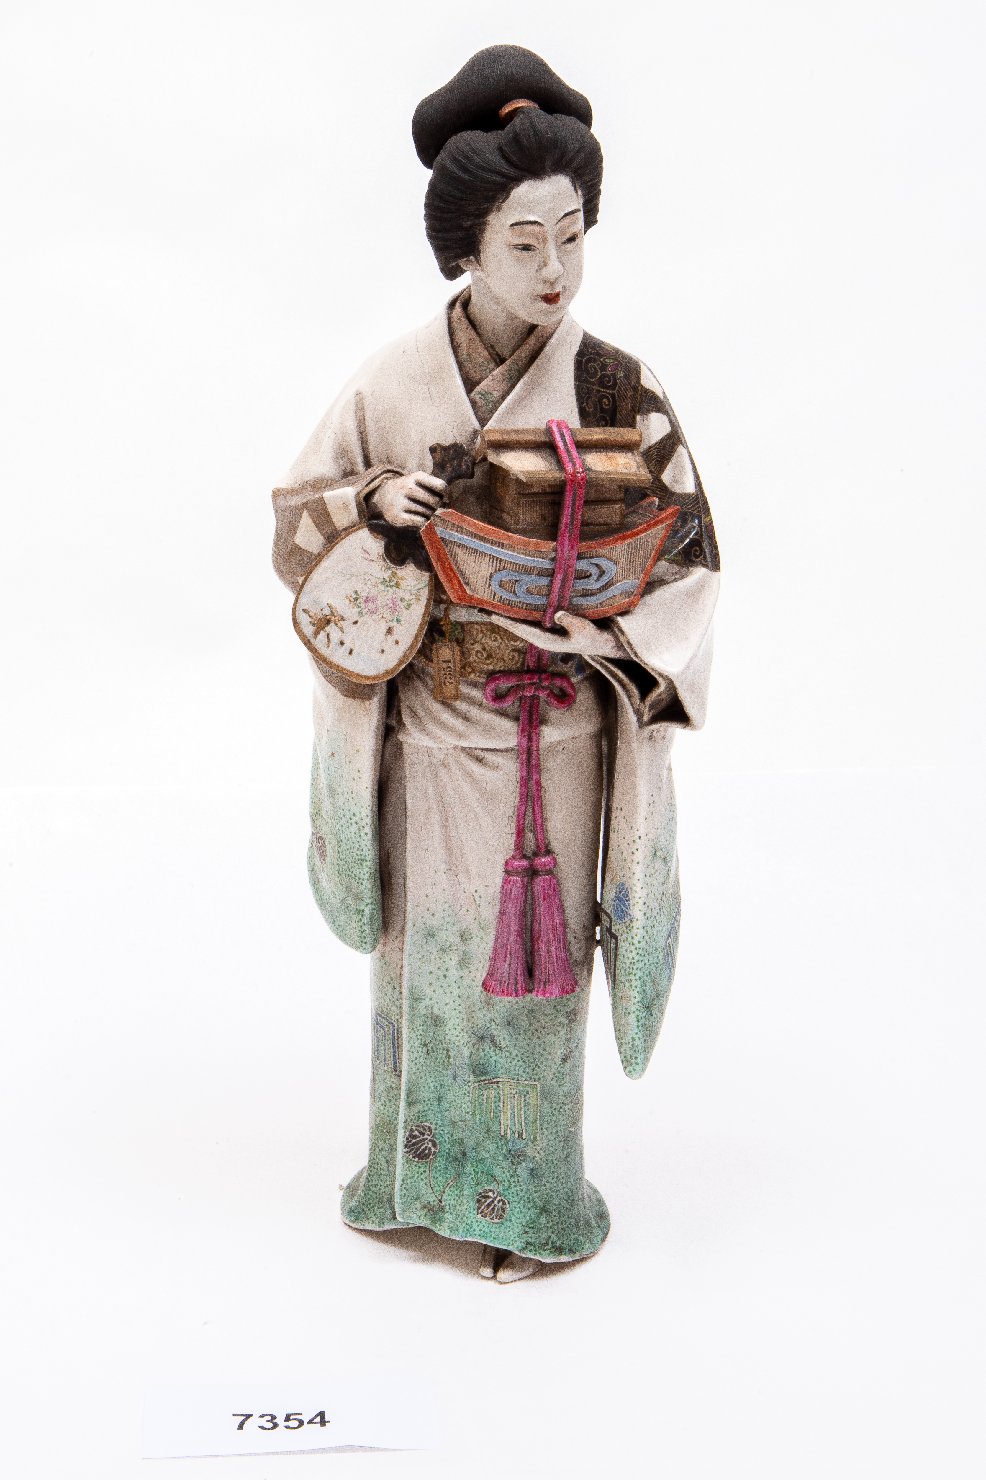 Ukifune (?), Fanciulla in kimono (statua) di Goraku 娯樂 (attribuito) - manifattura giapponese (XIX)